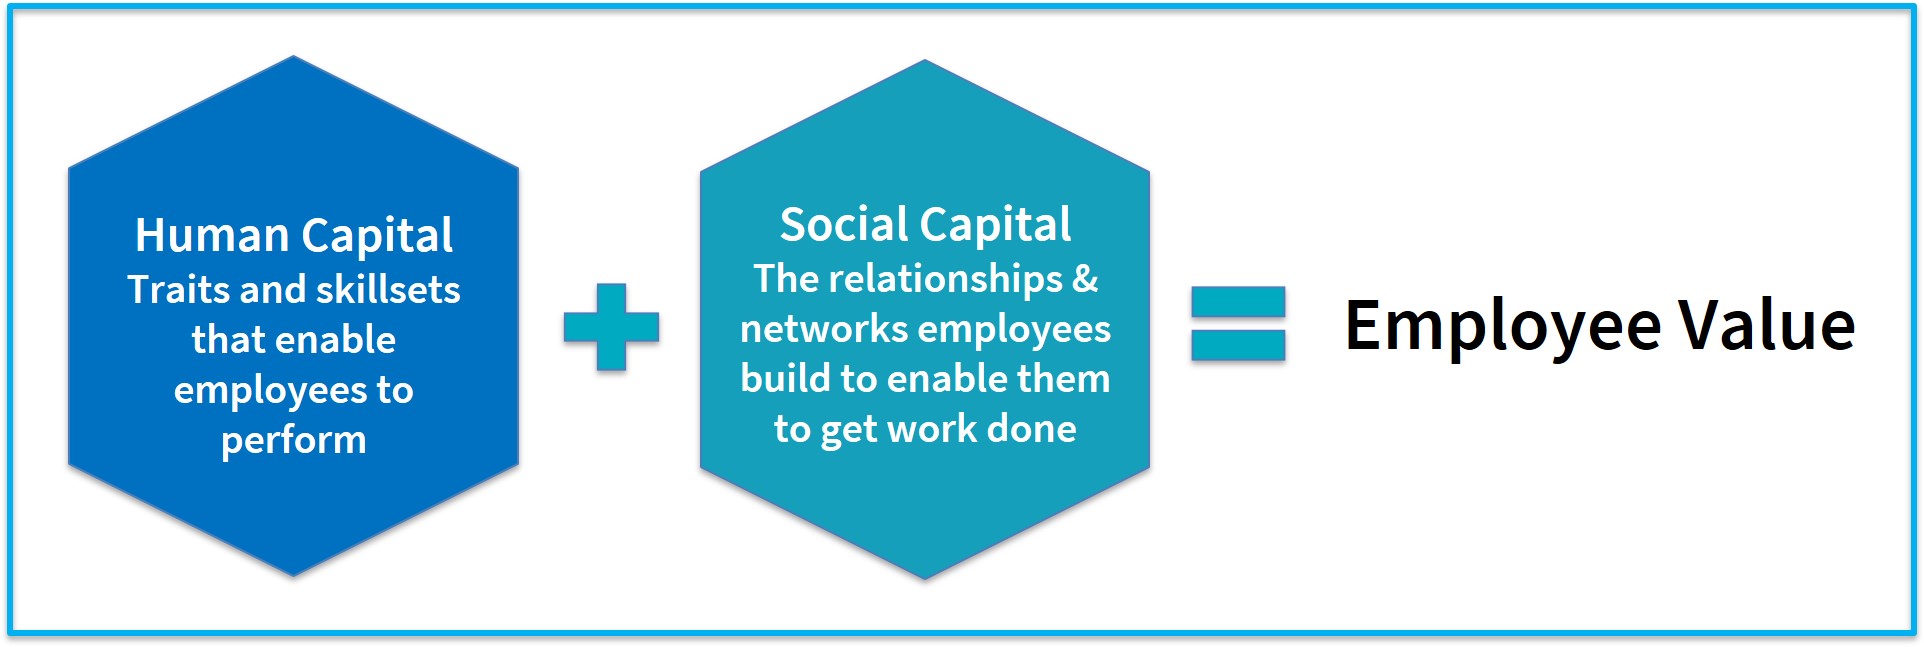 Employee Value Human Capital plus Social Capital